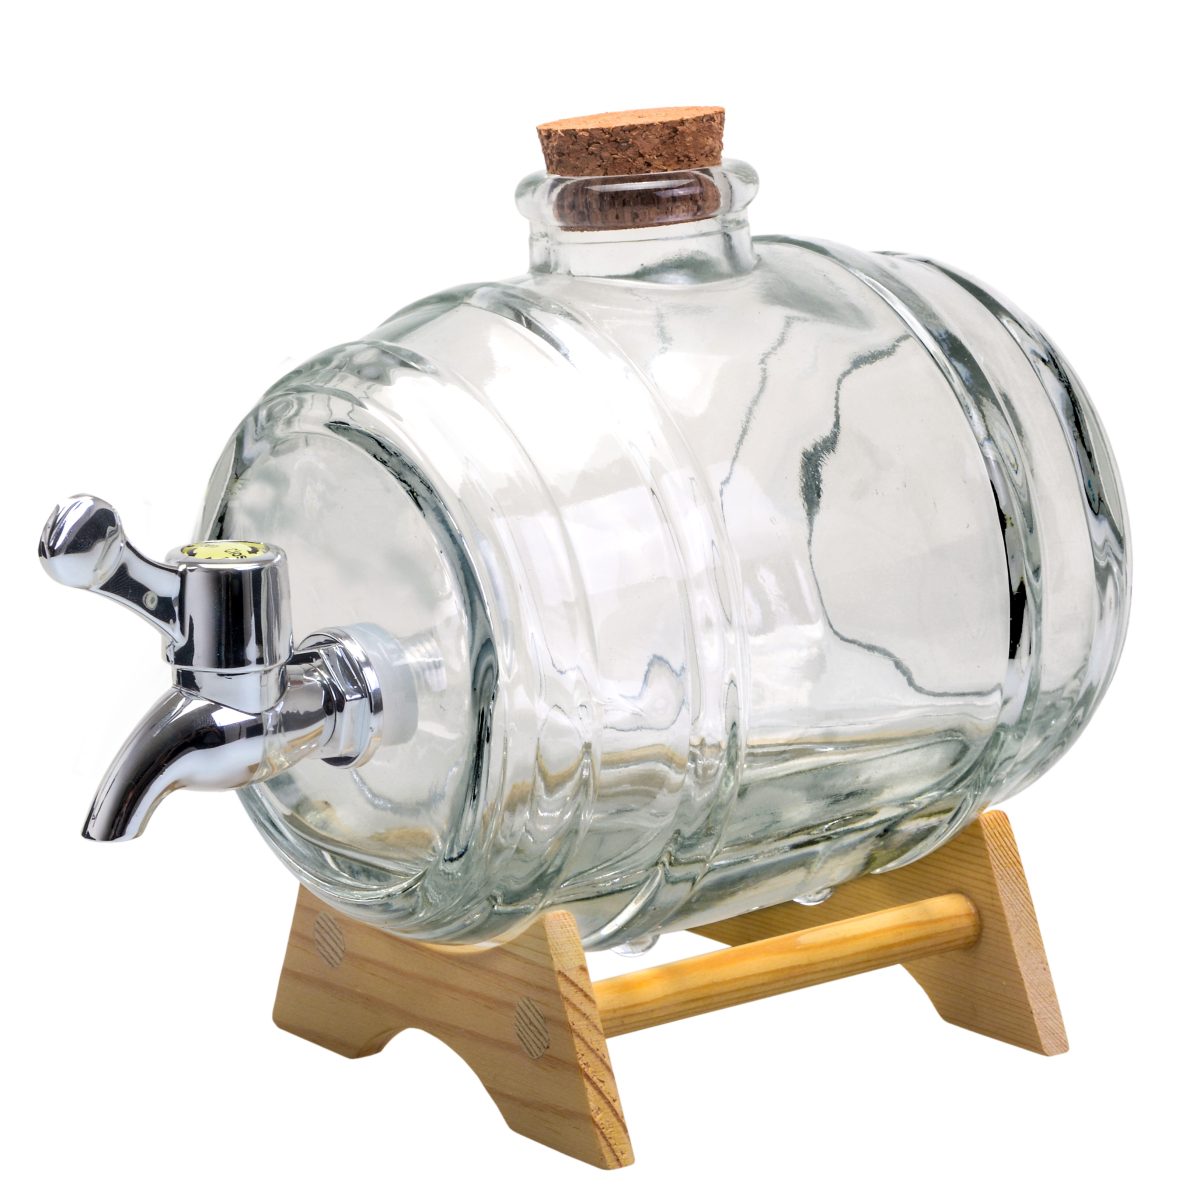 Стъклен диспенсер за алкохол буре Vin Bouquet - 1 л